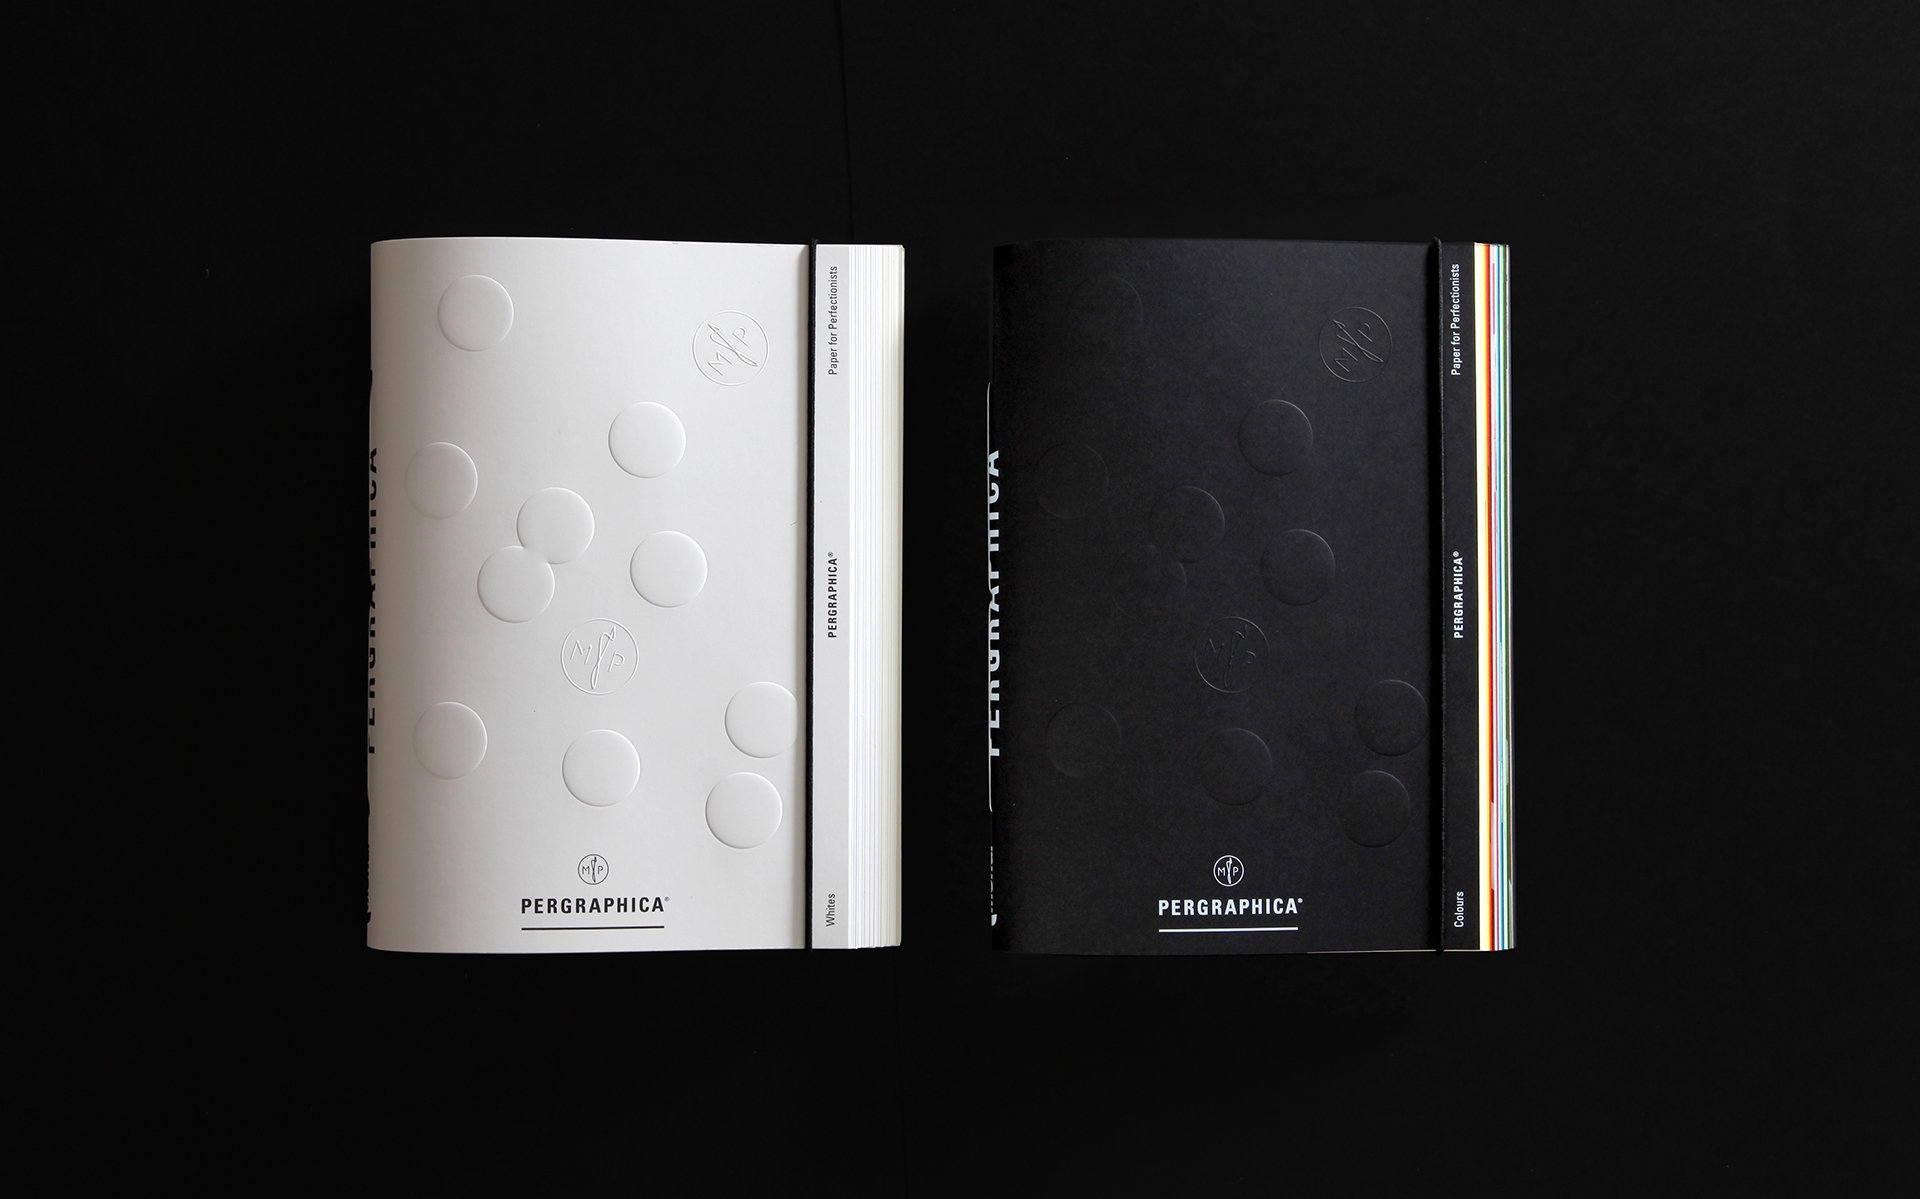 bob-design-mondi-books-front-covers-80227.jpeg